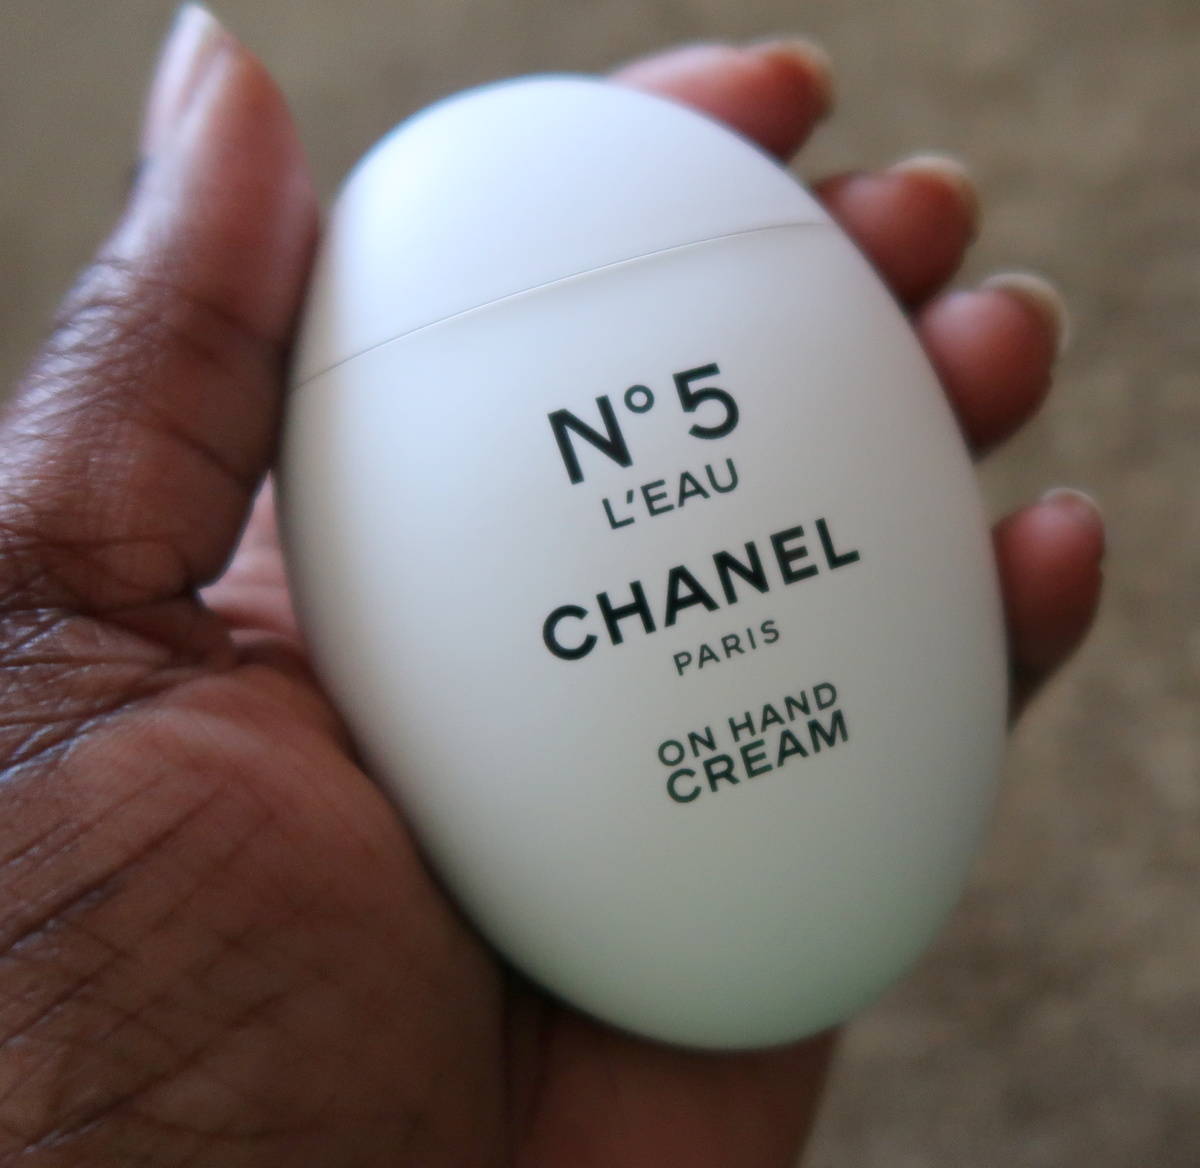 Chanel No 5 L'Eau: On Hand Cream - Patent Purple Life Beauty Blog